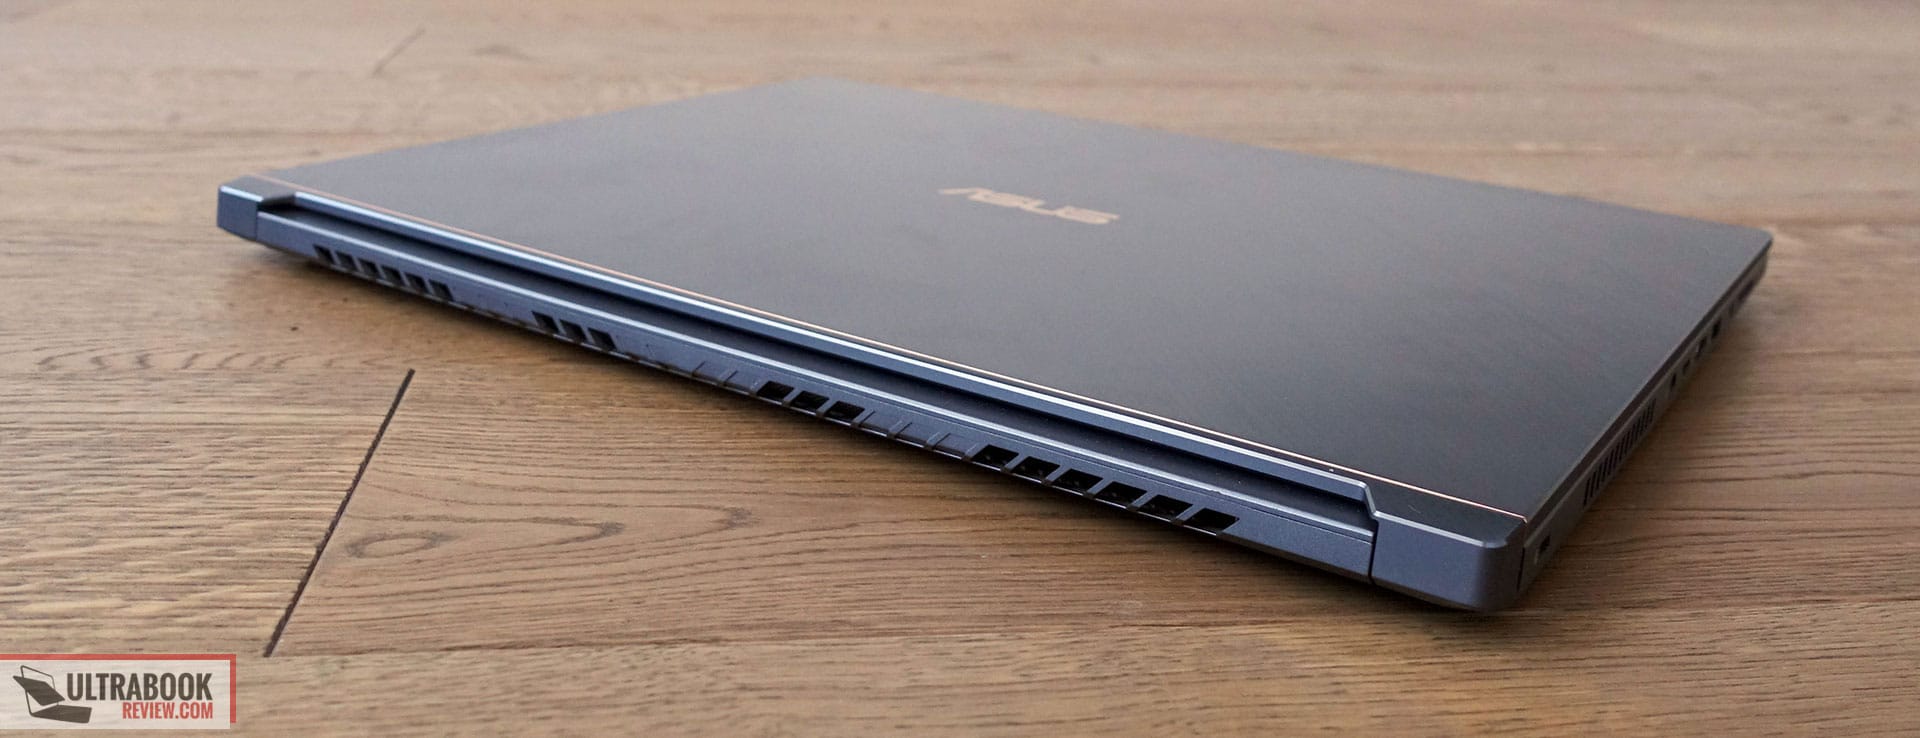 ASUS ProArt StudioBook Pro 17 W700 review (W700G2T - Core i7 